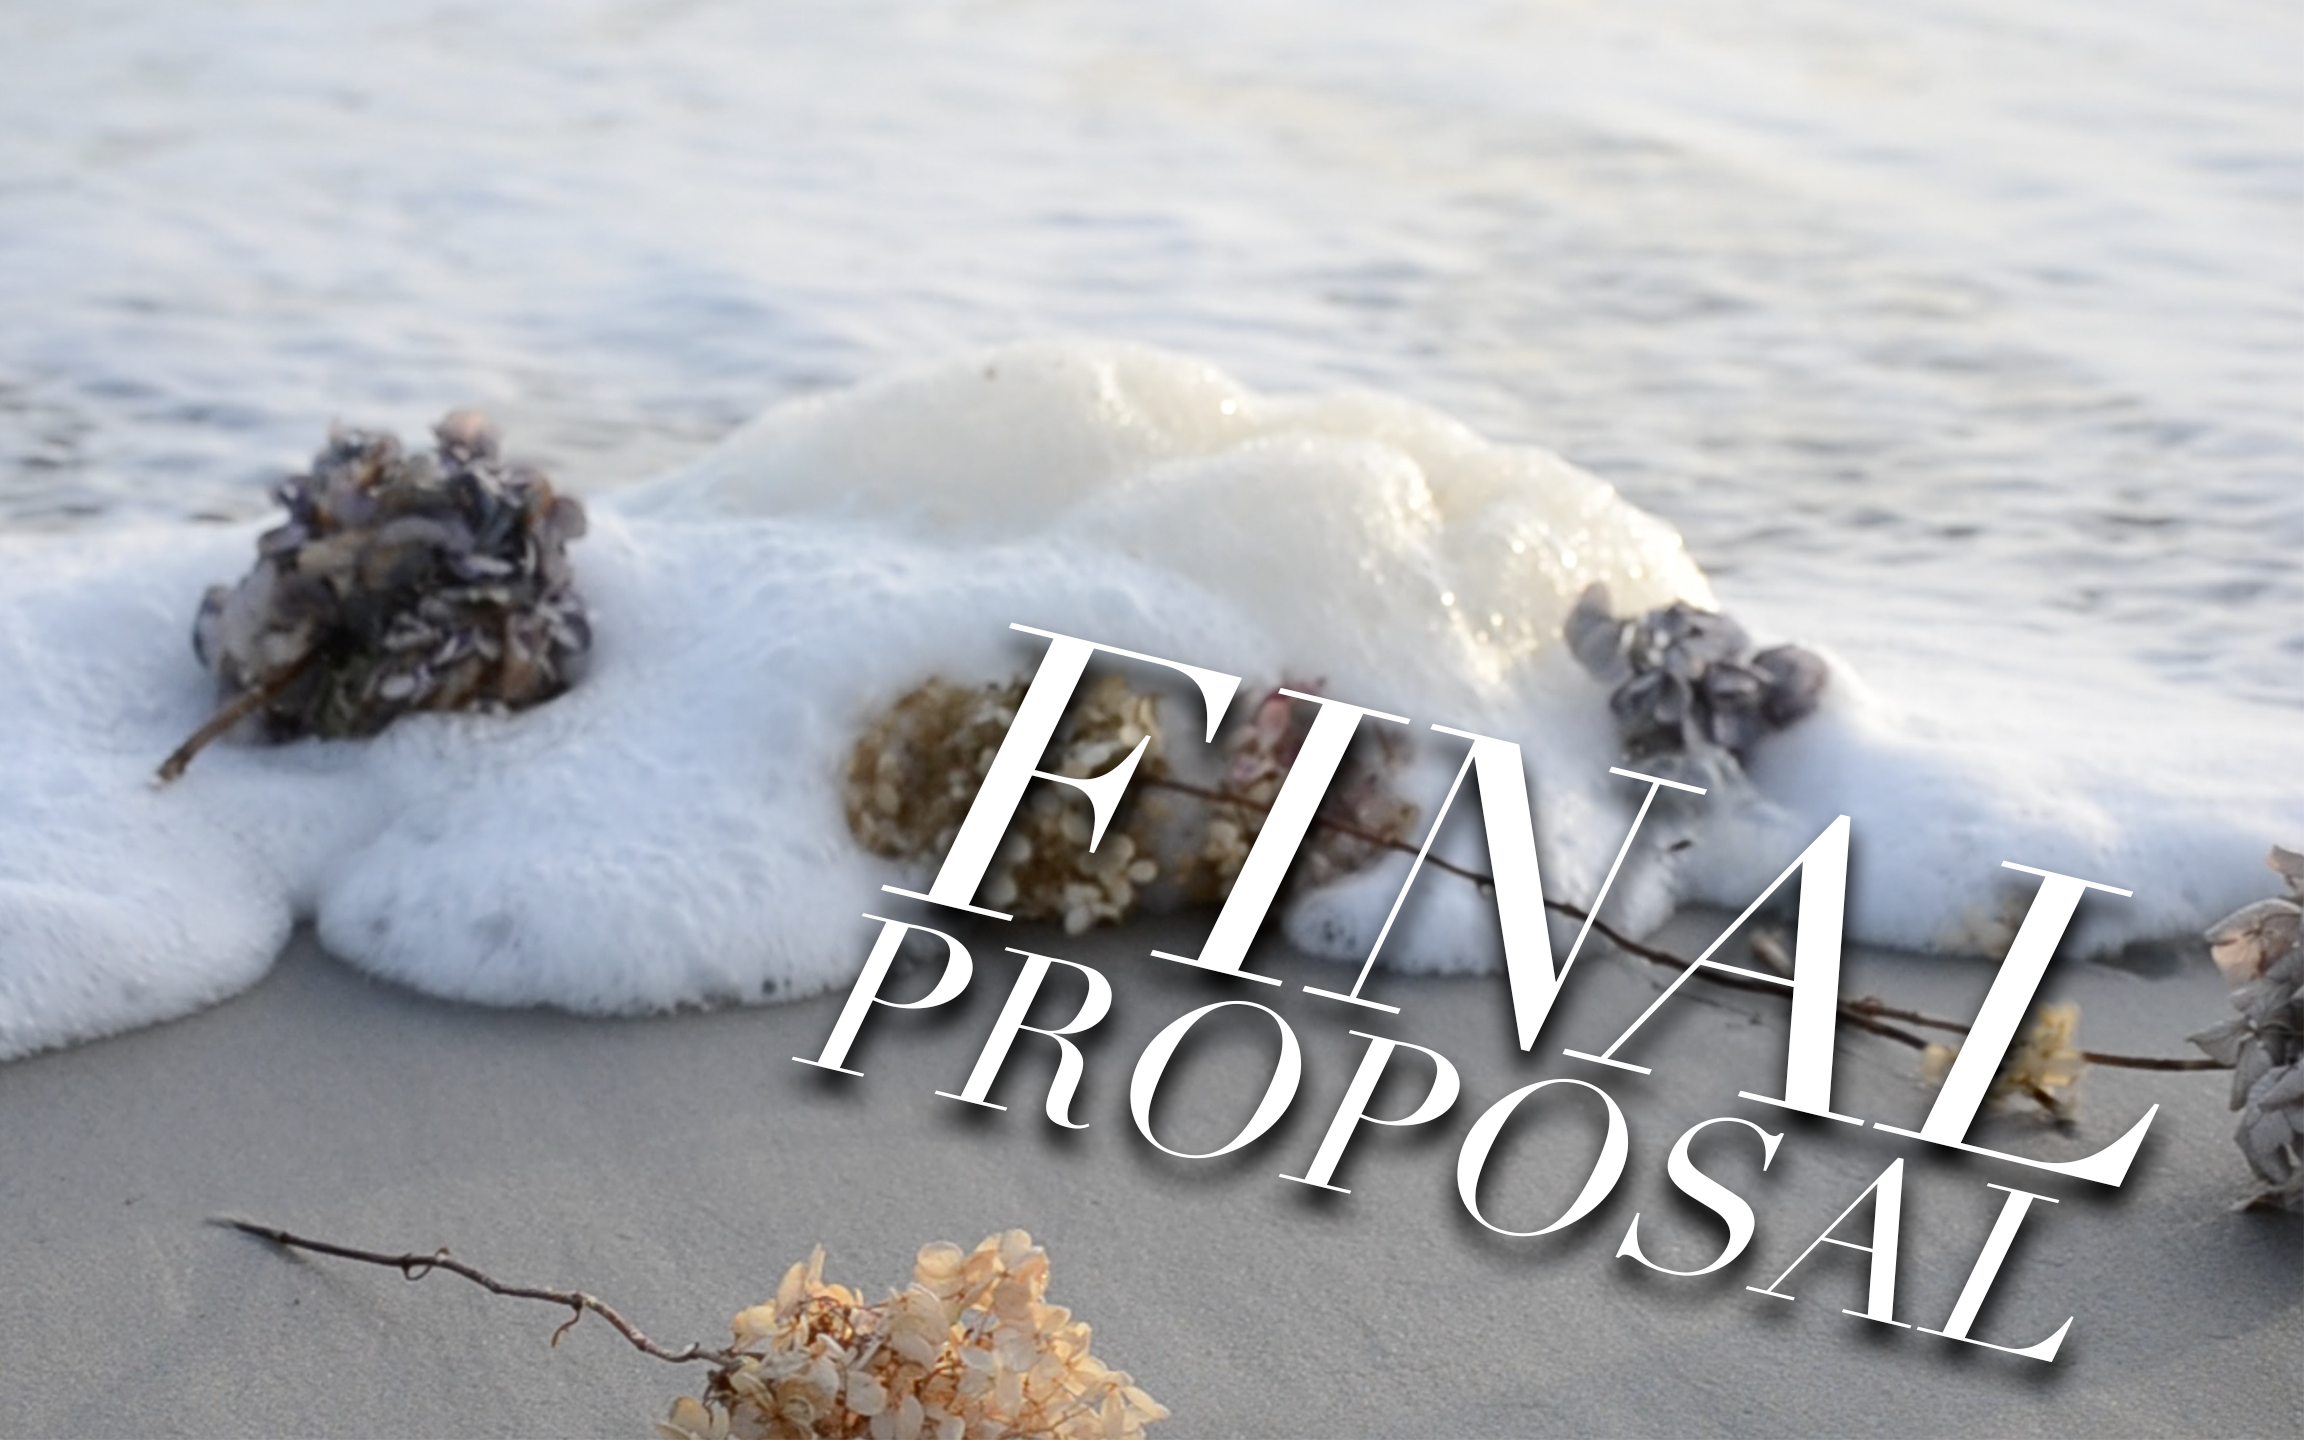 SHIFT: Final Project Proposal